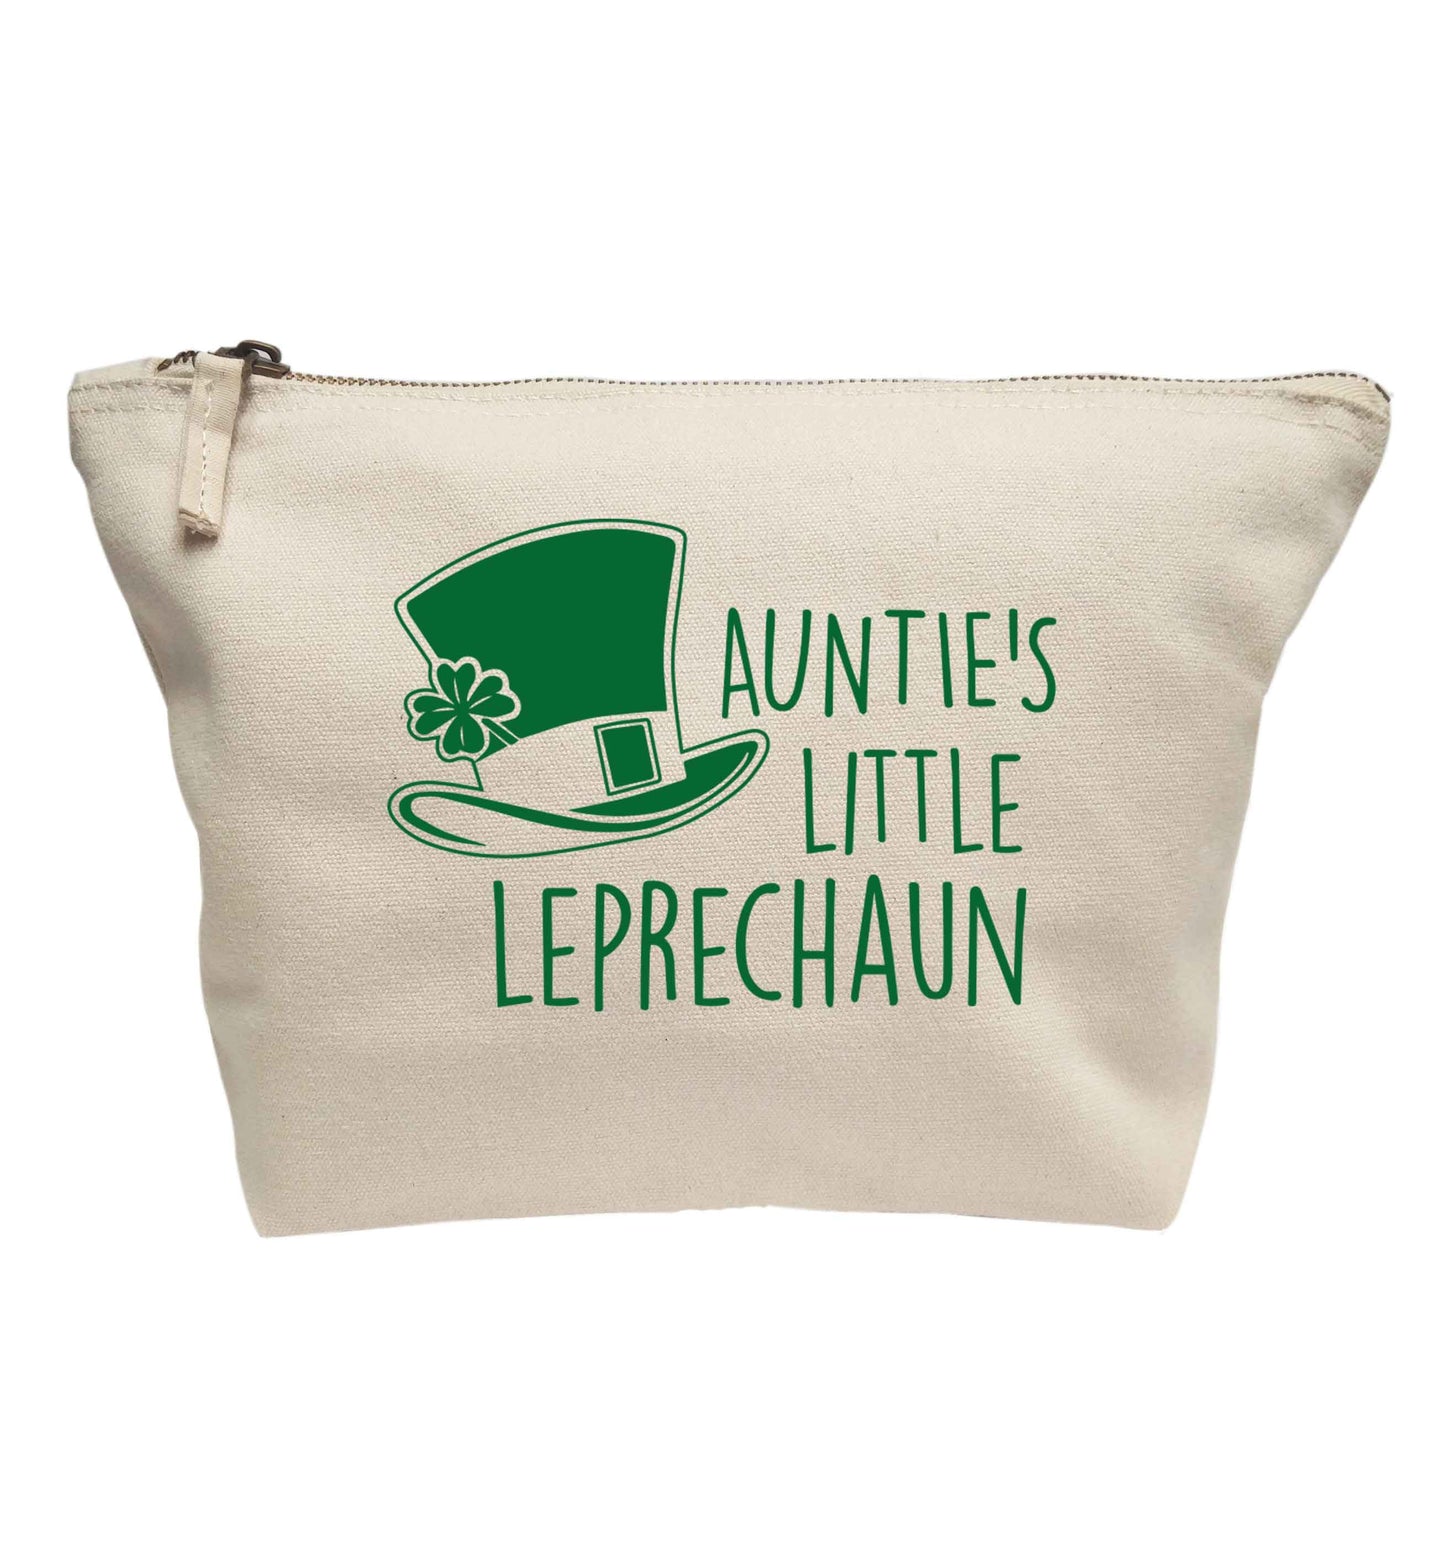 Auntie's little leprechaun | Makeup / wash bag